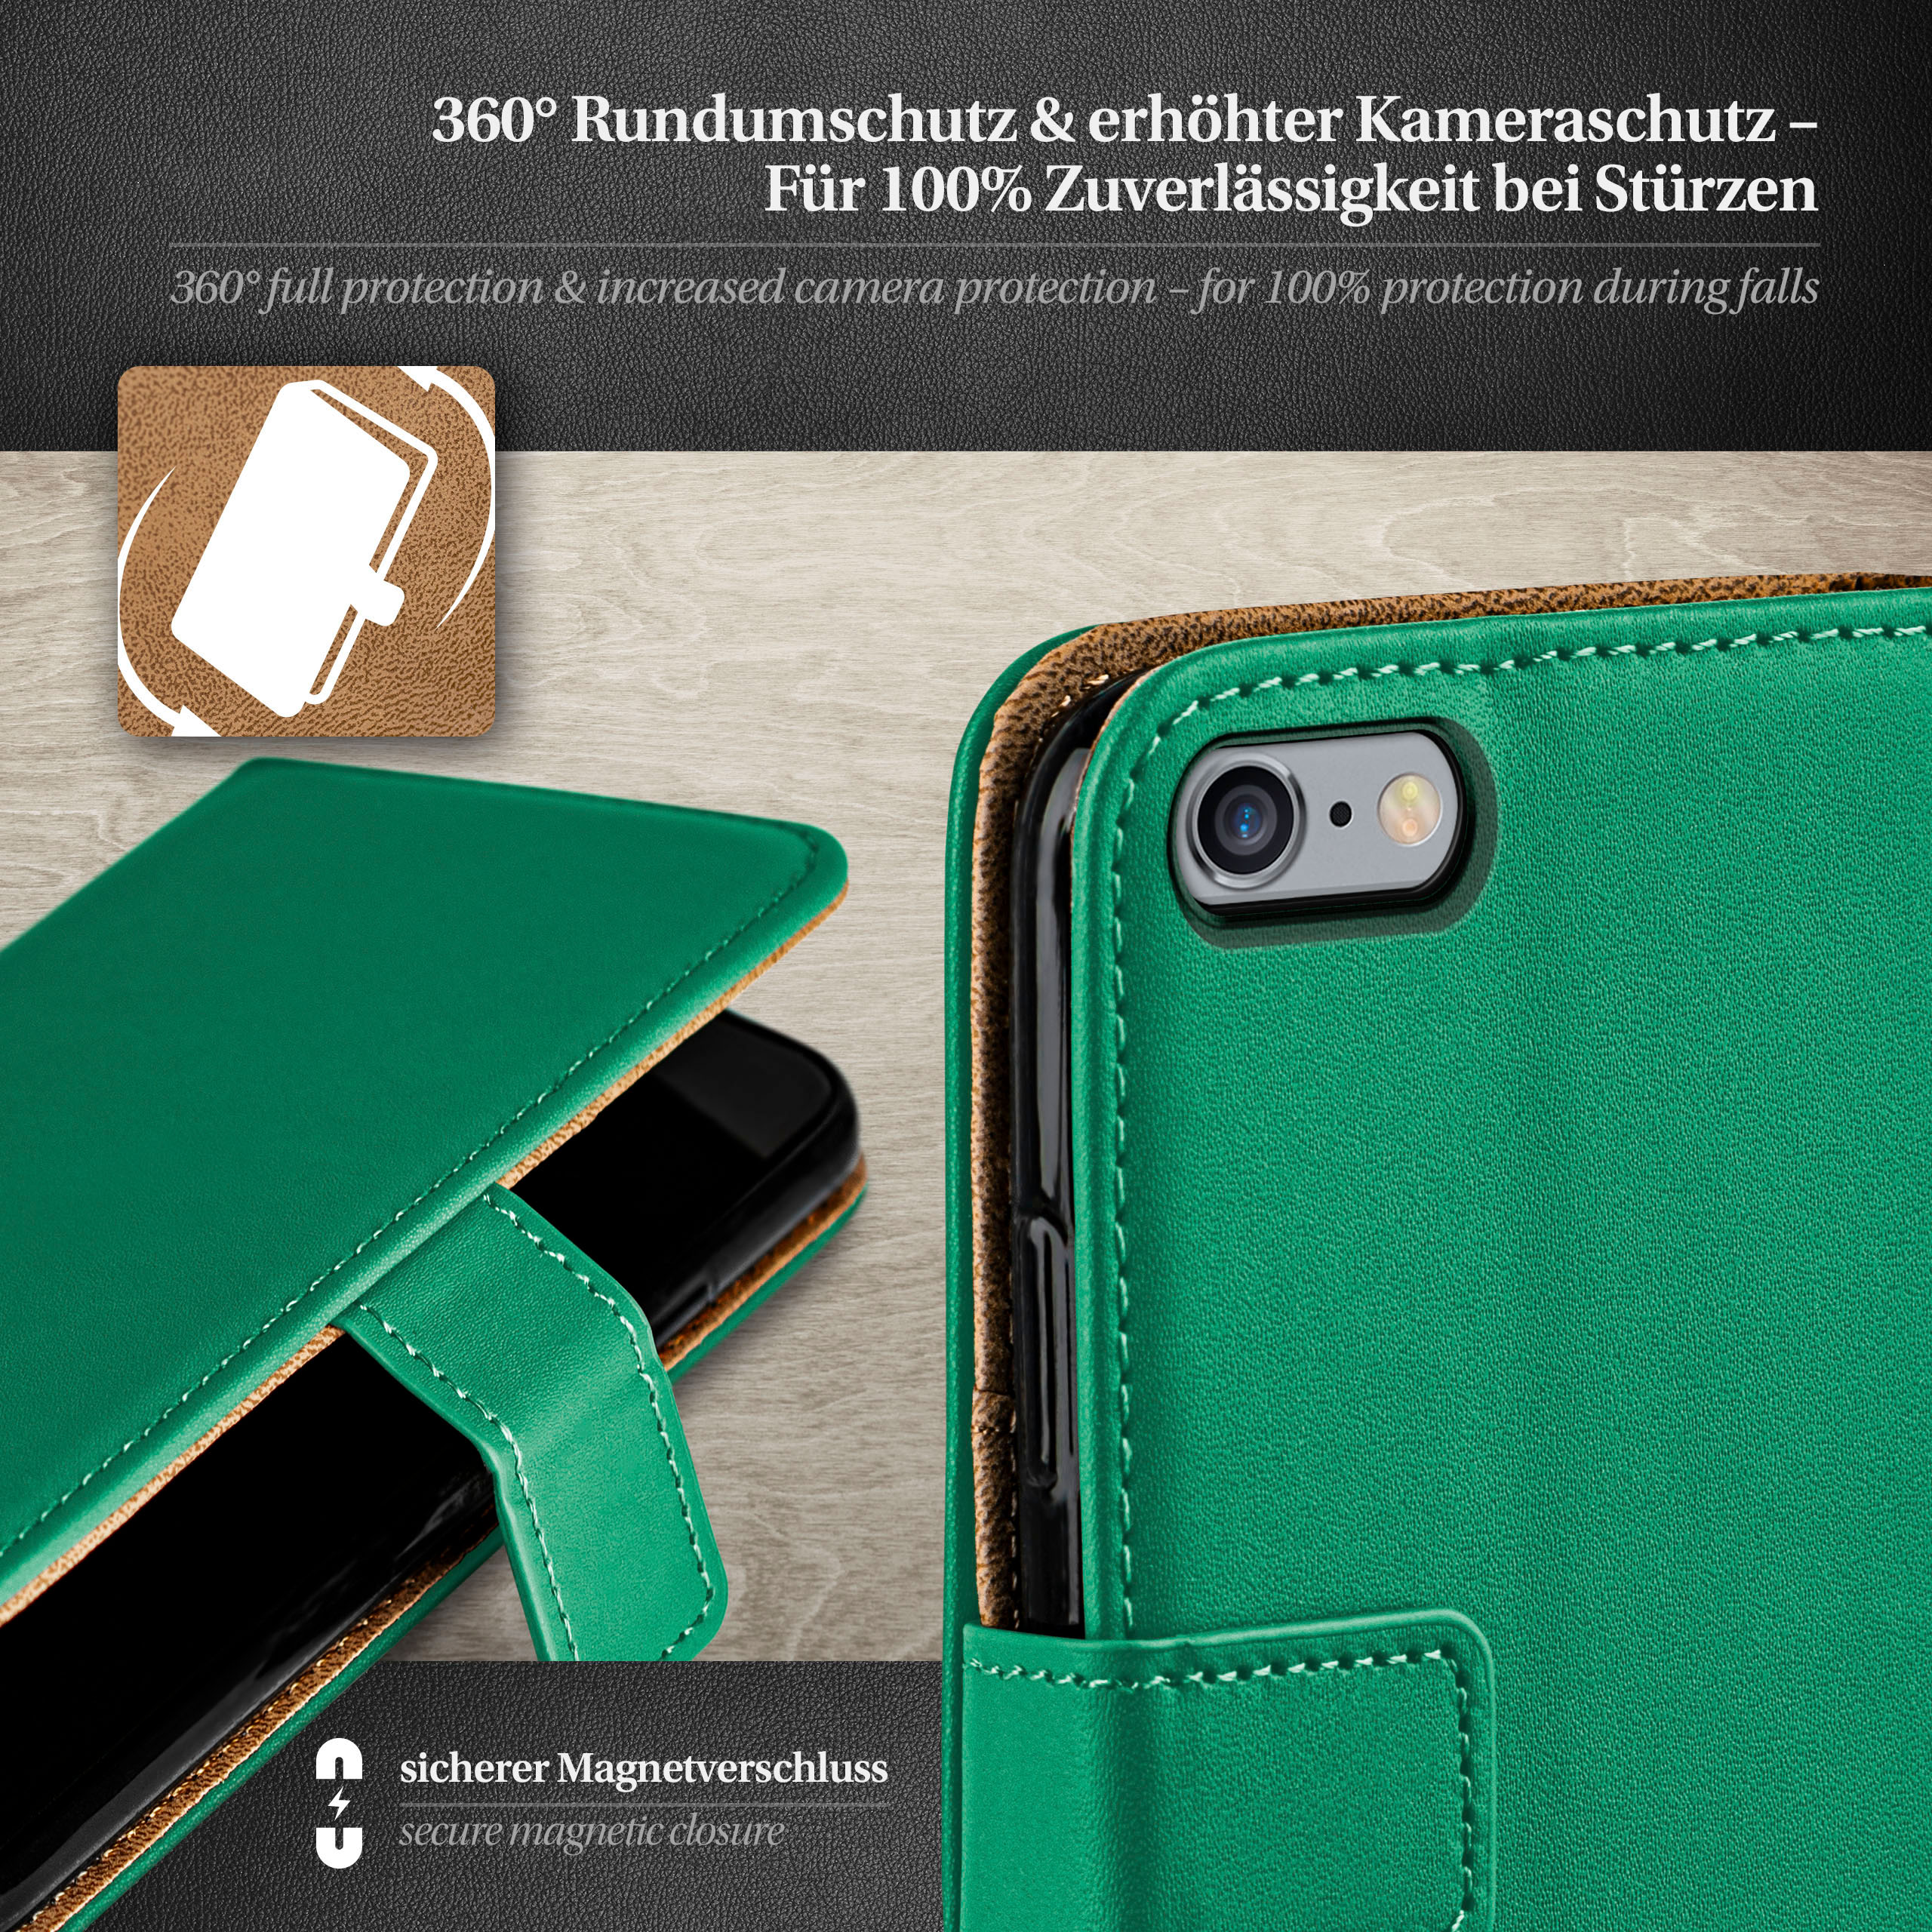 MOEX Book Case, iPhone 6s 6, Bookcover, Apple, iPhone Emerald-Green 